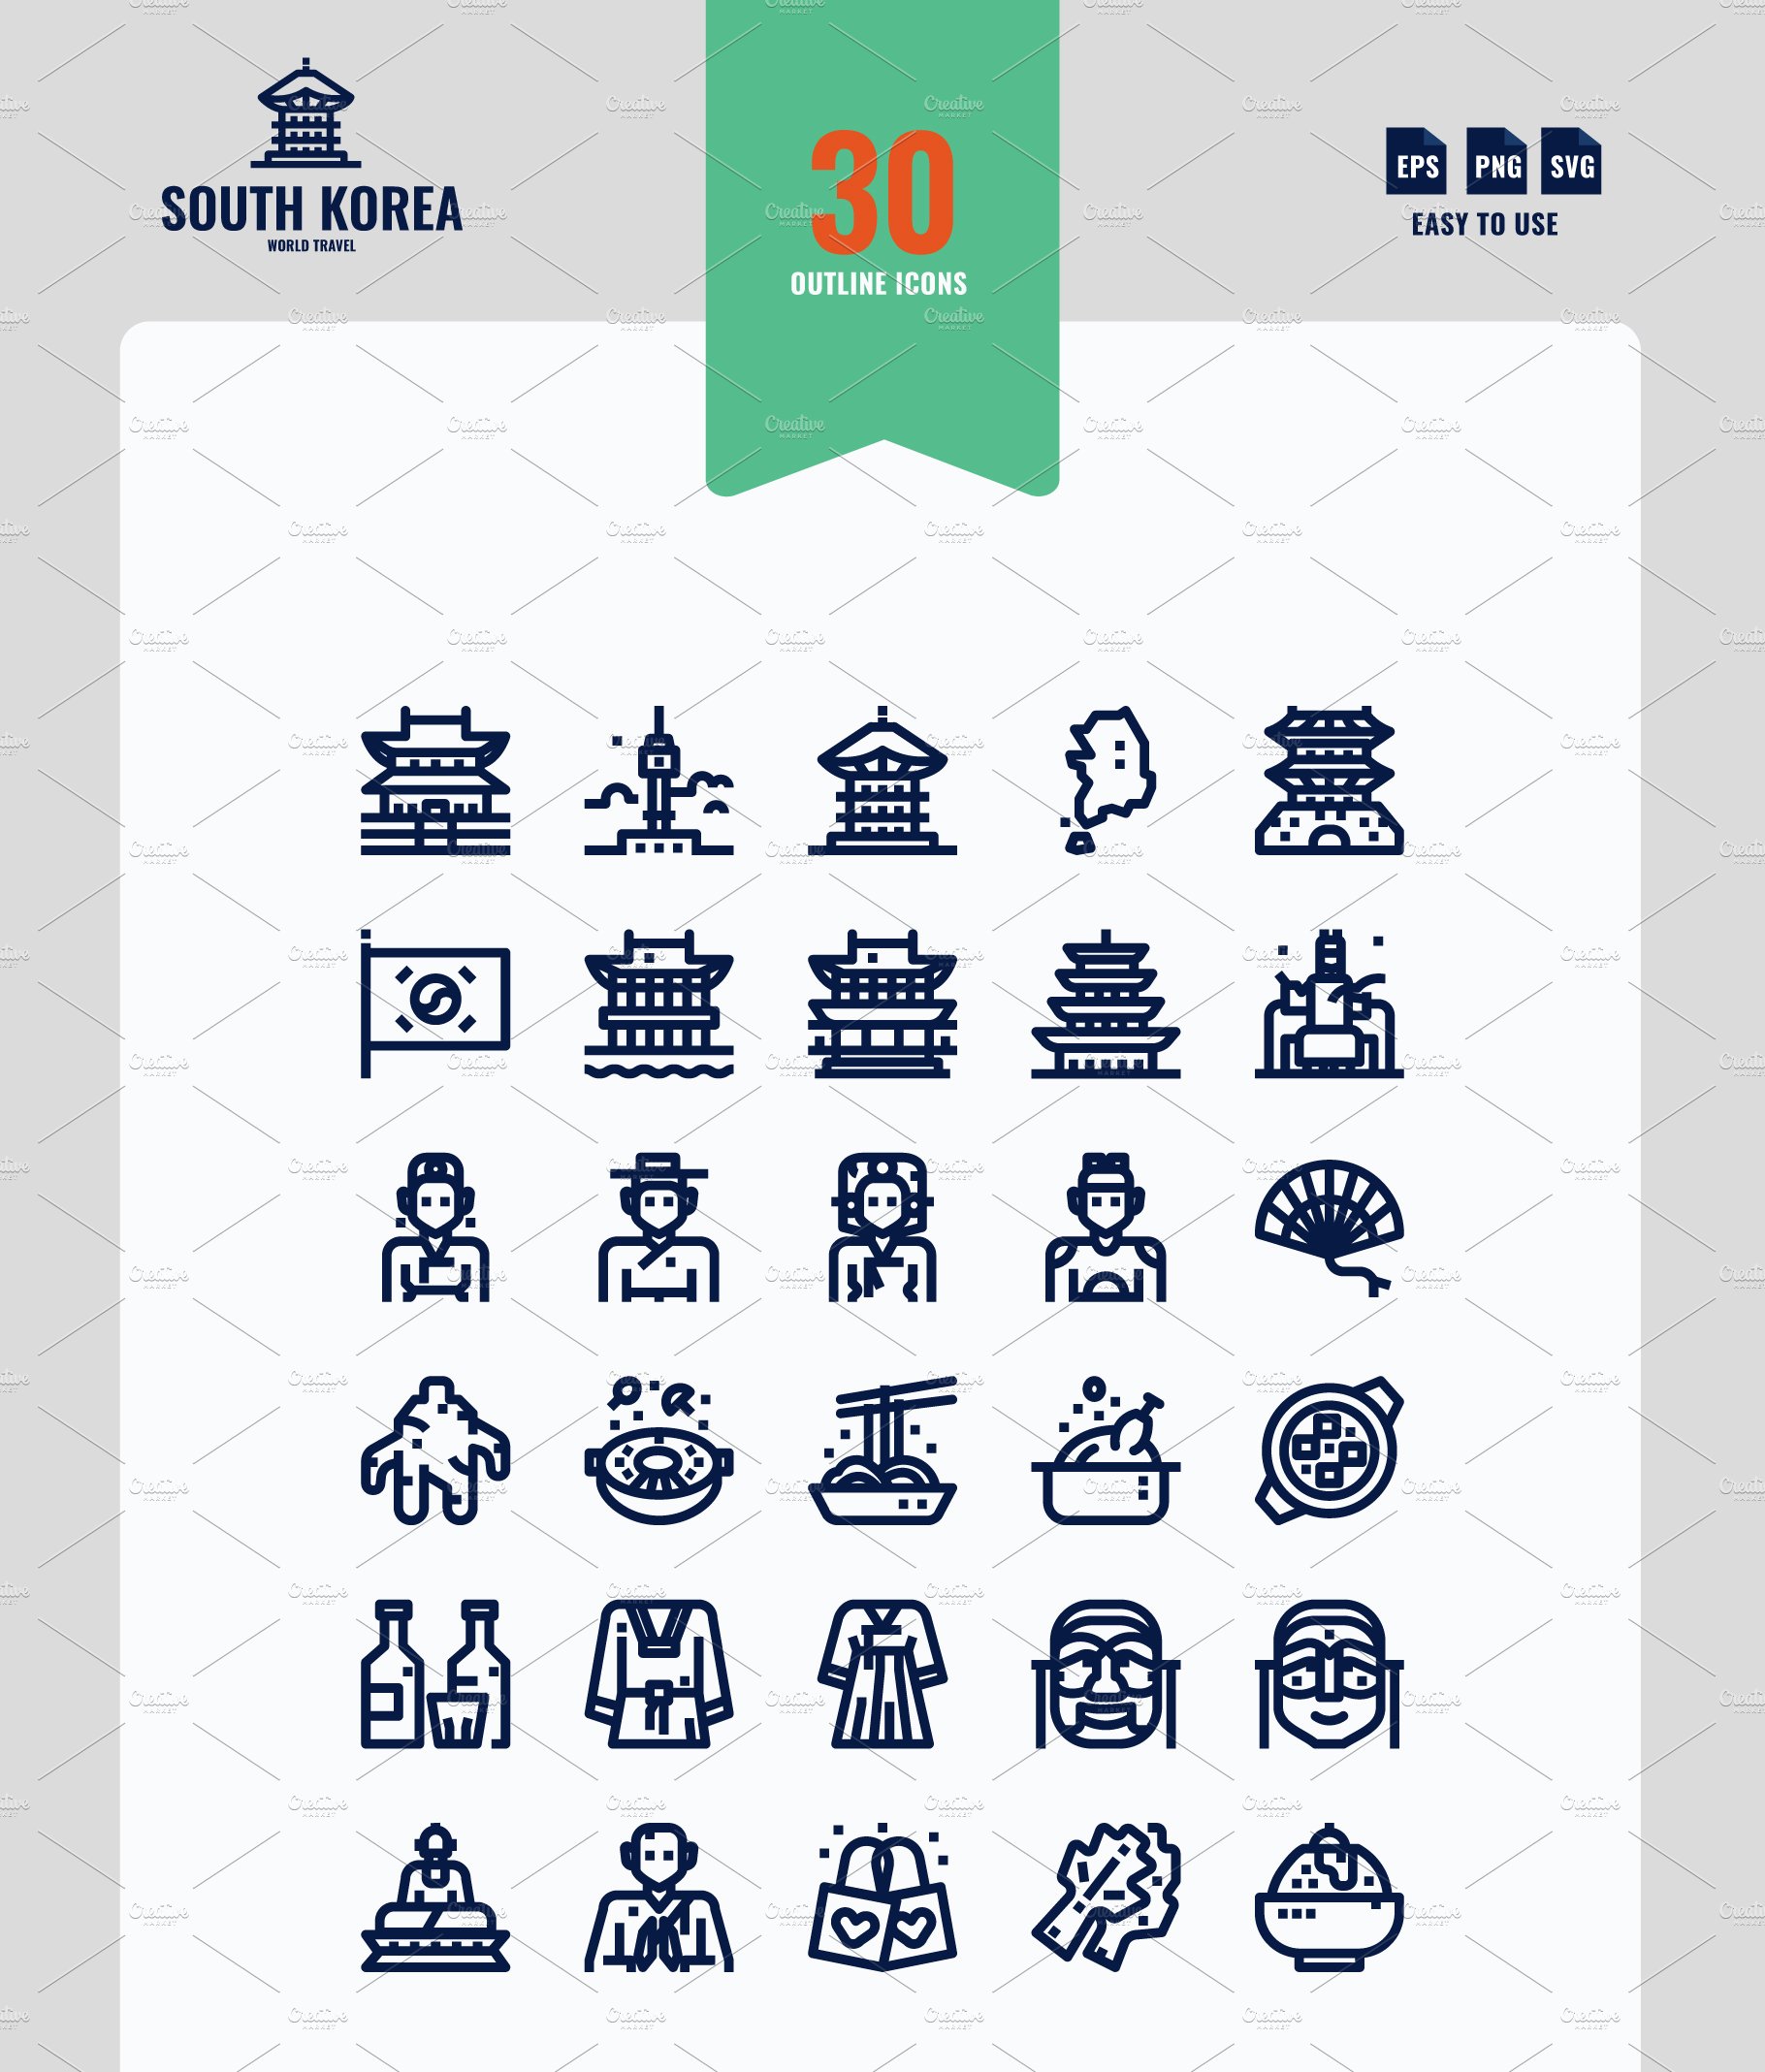 South Korea 90 Icons preview image.